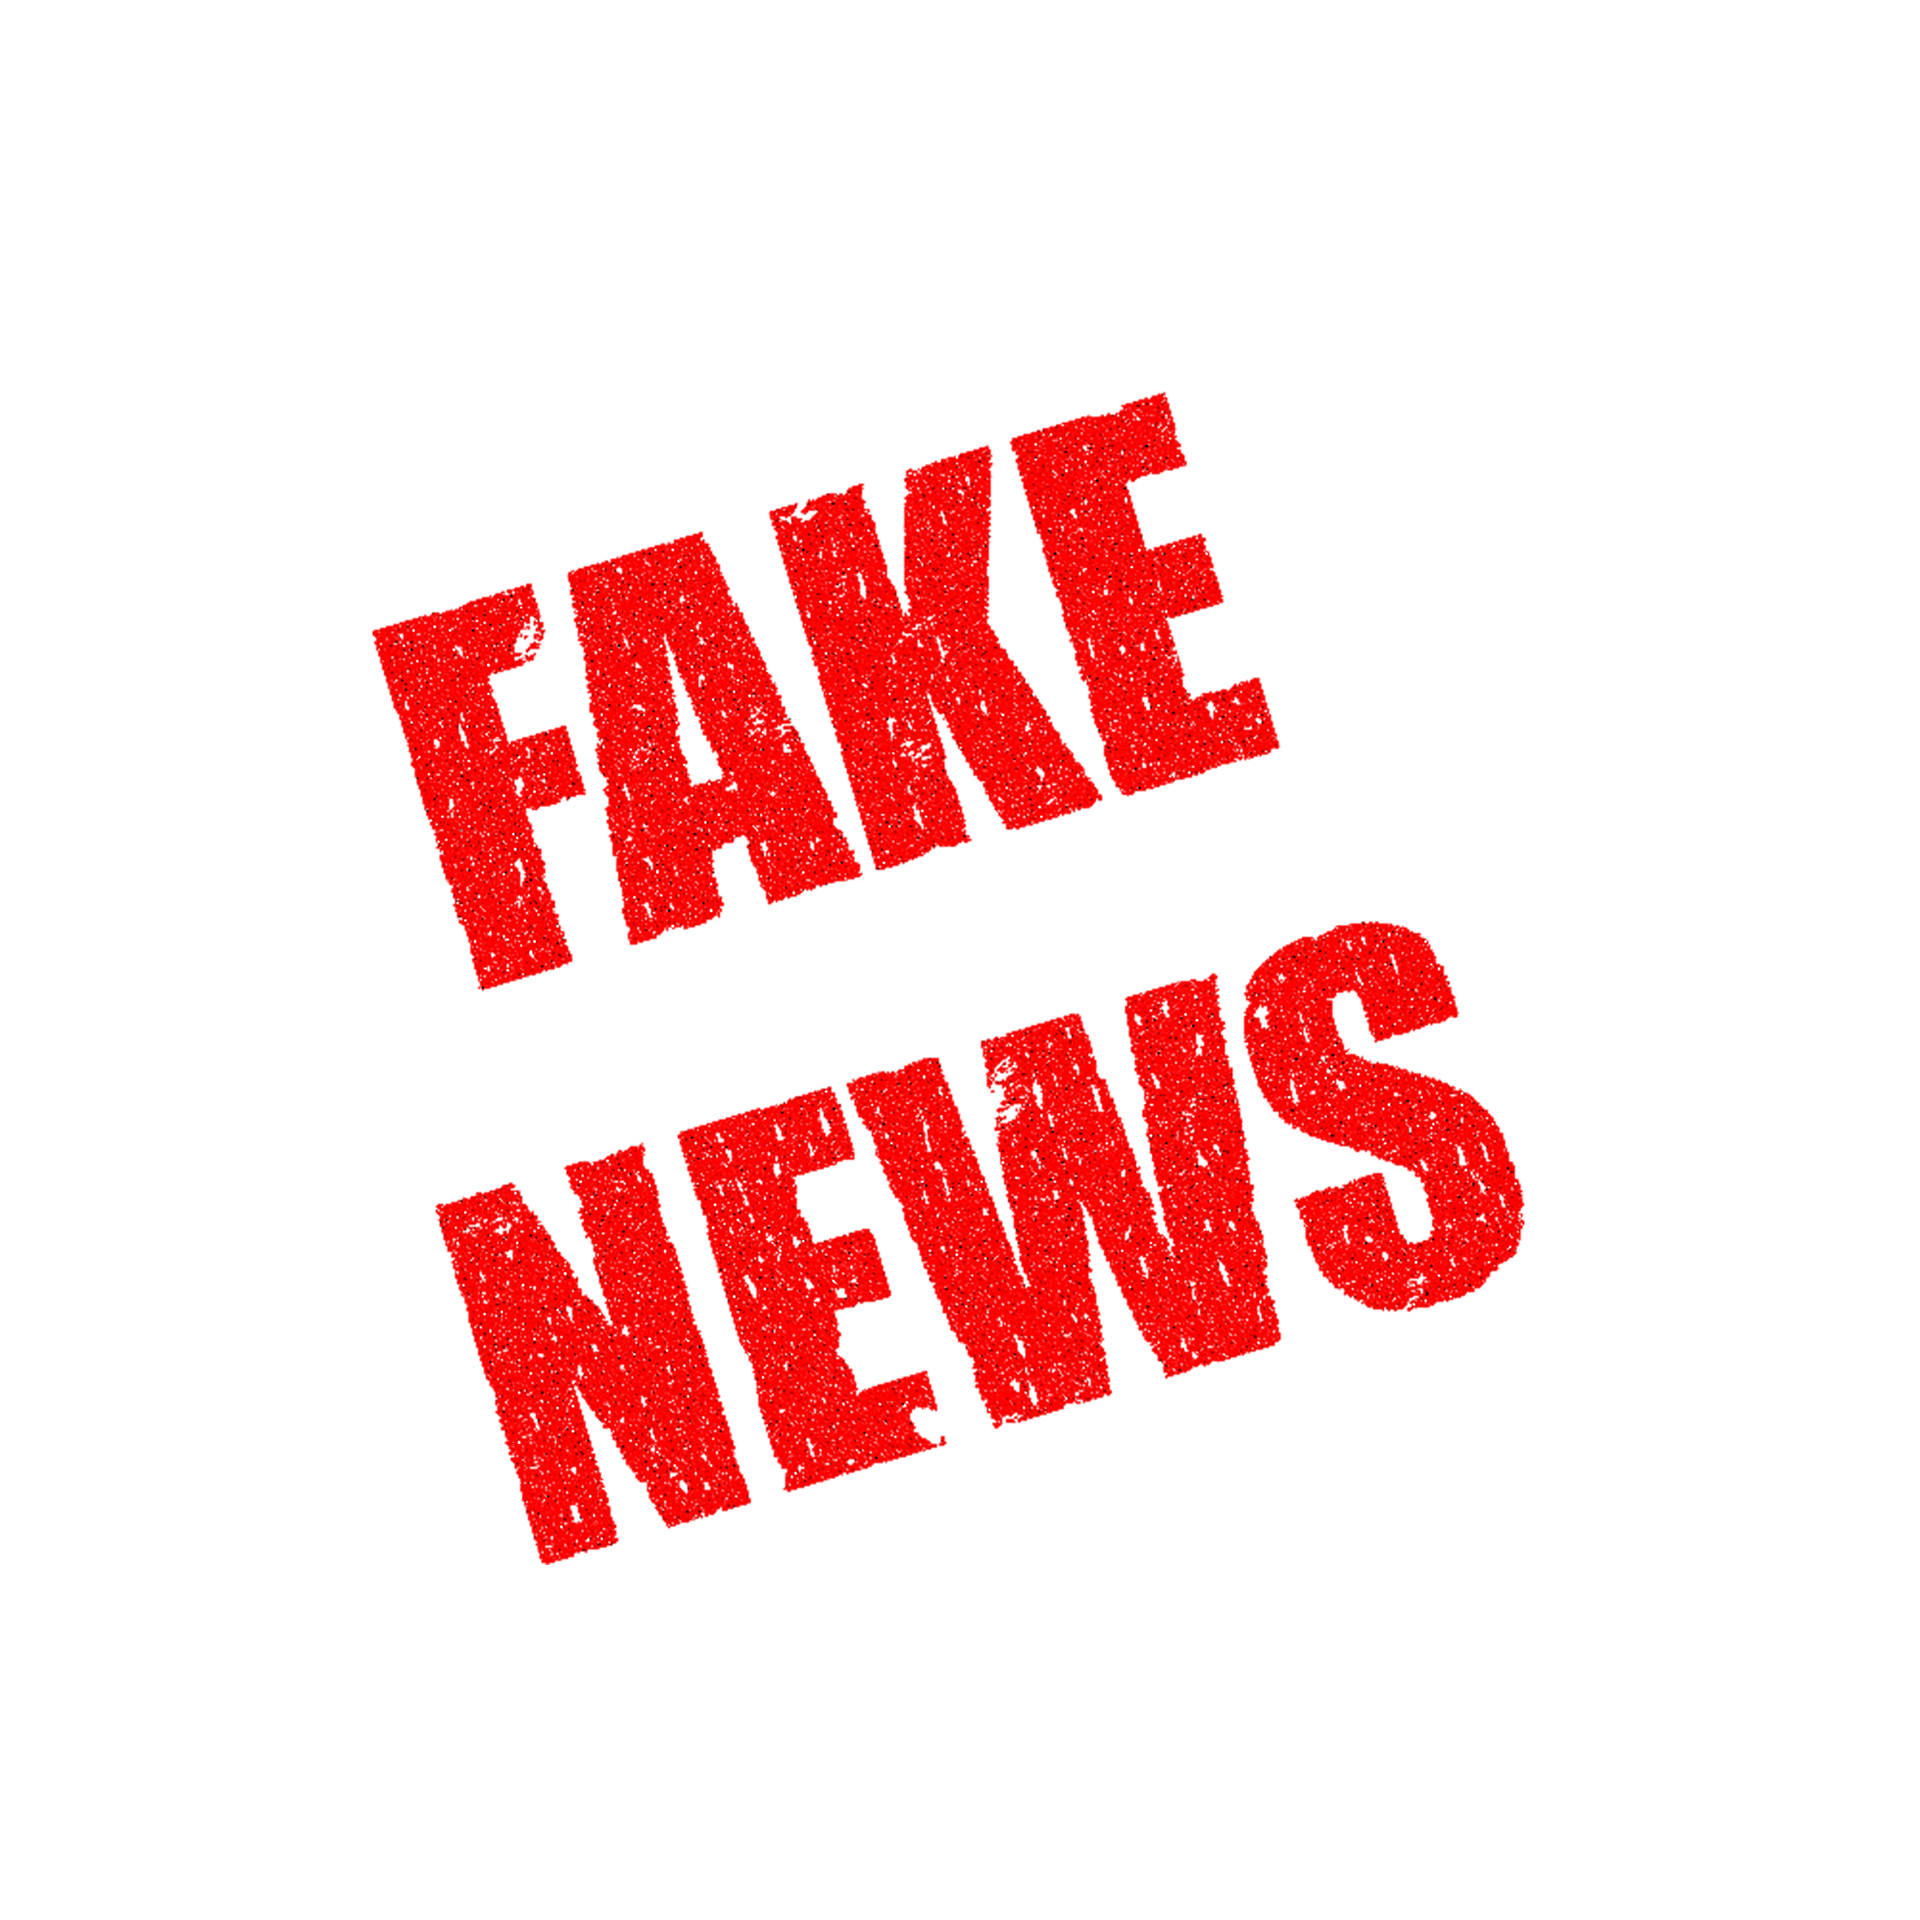 Fenómeno Fakes News